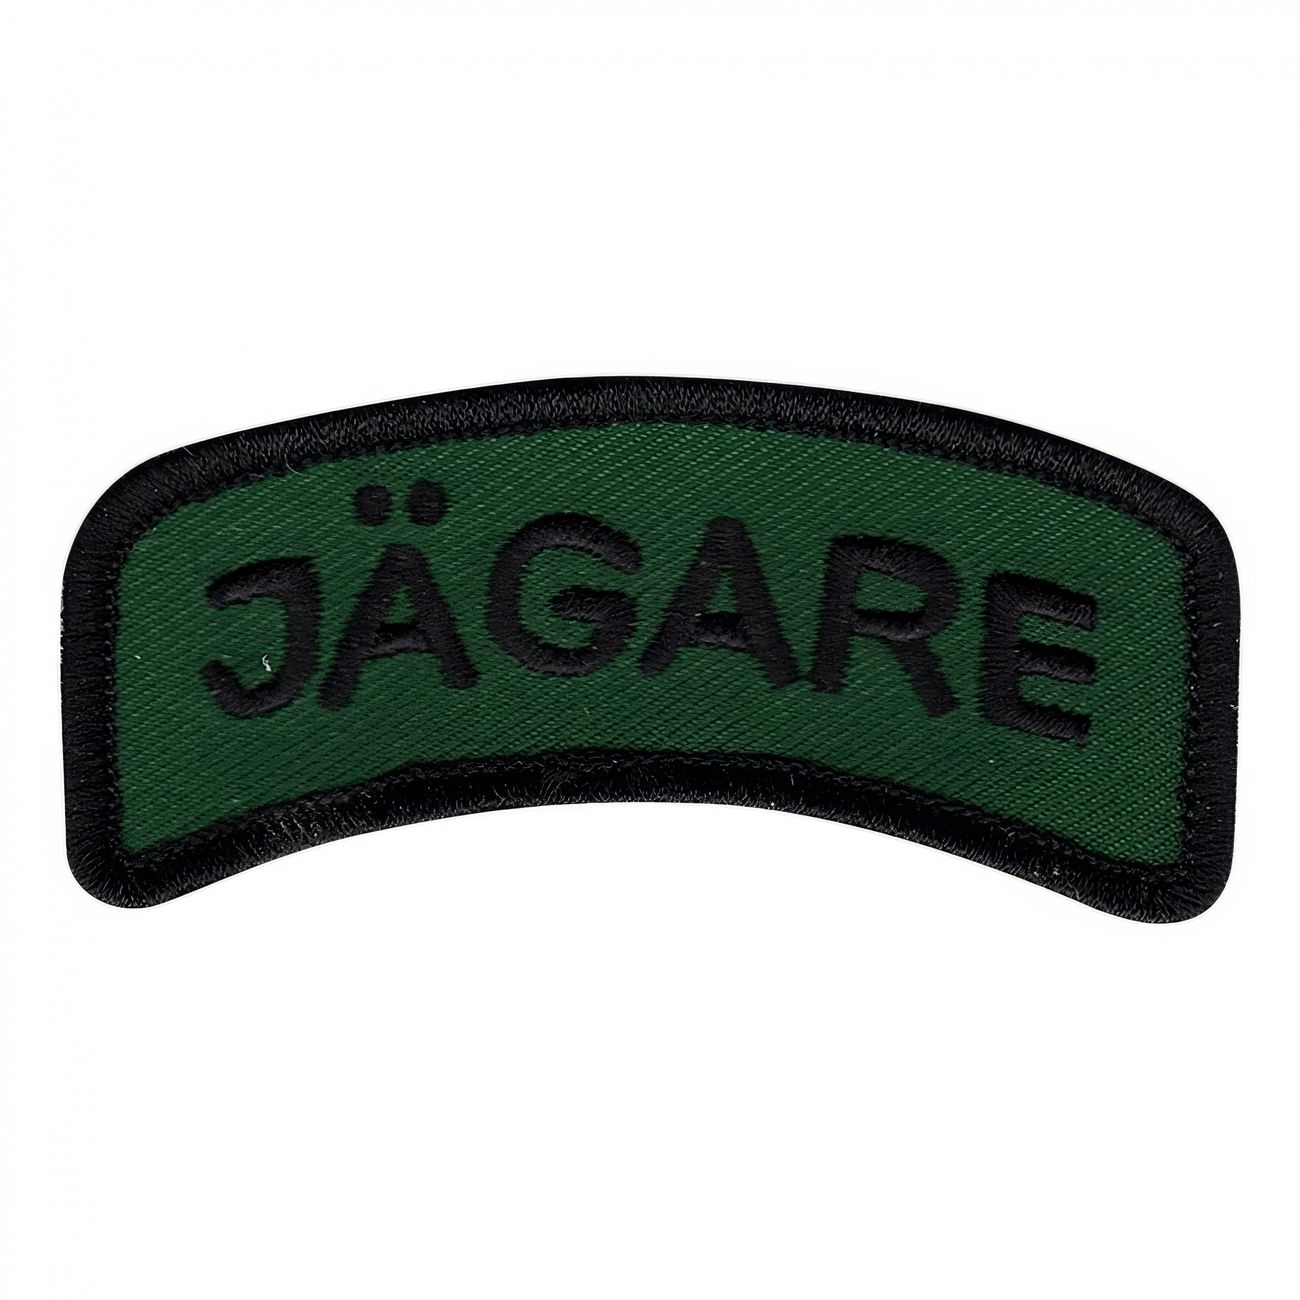 tygmarke-jagare-bage-a-94602-1